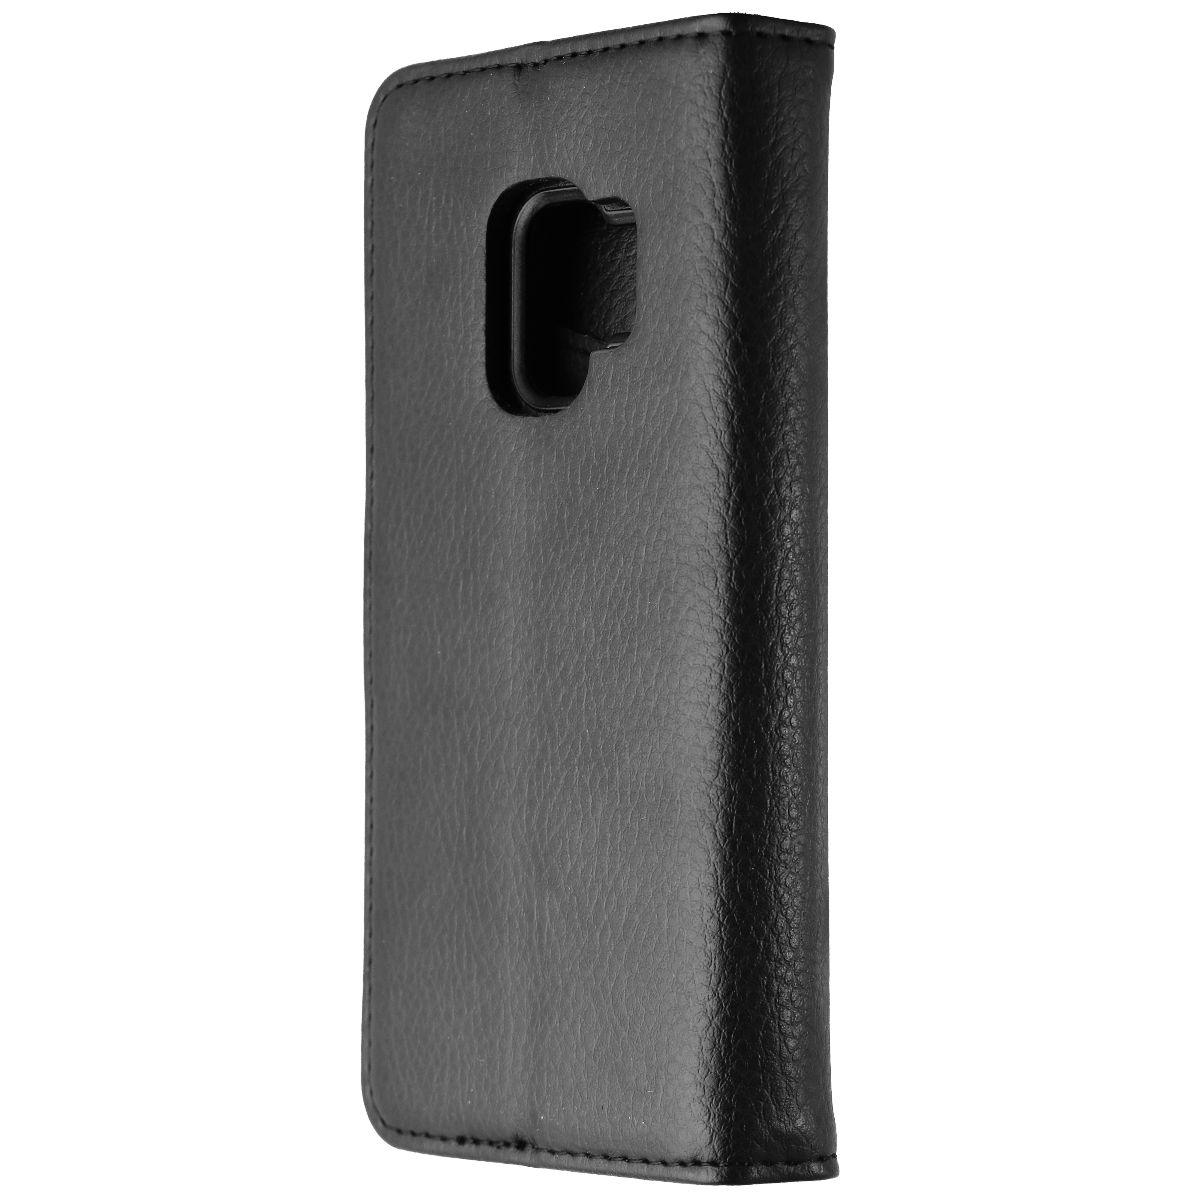 Strongnfree Moderna Plus 2-in-1 Folio Wallet Case For Galaxy S9 - Black (Refurbished)